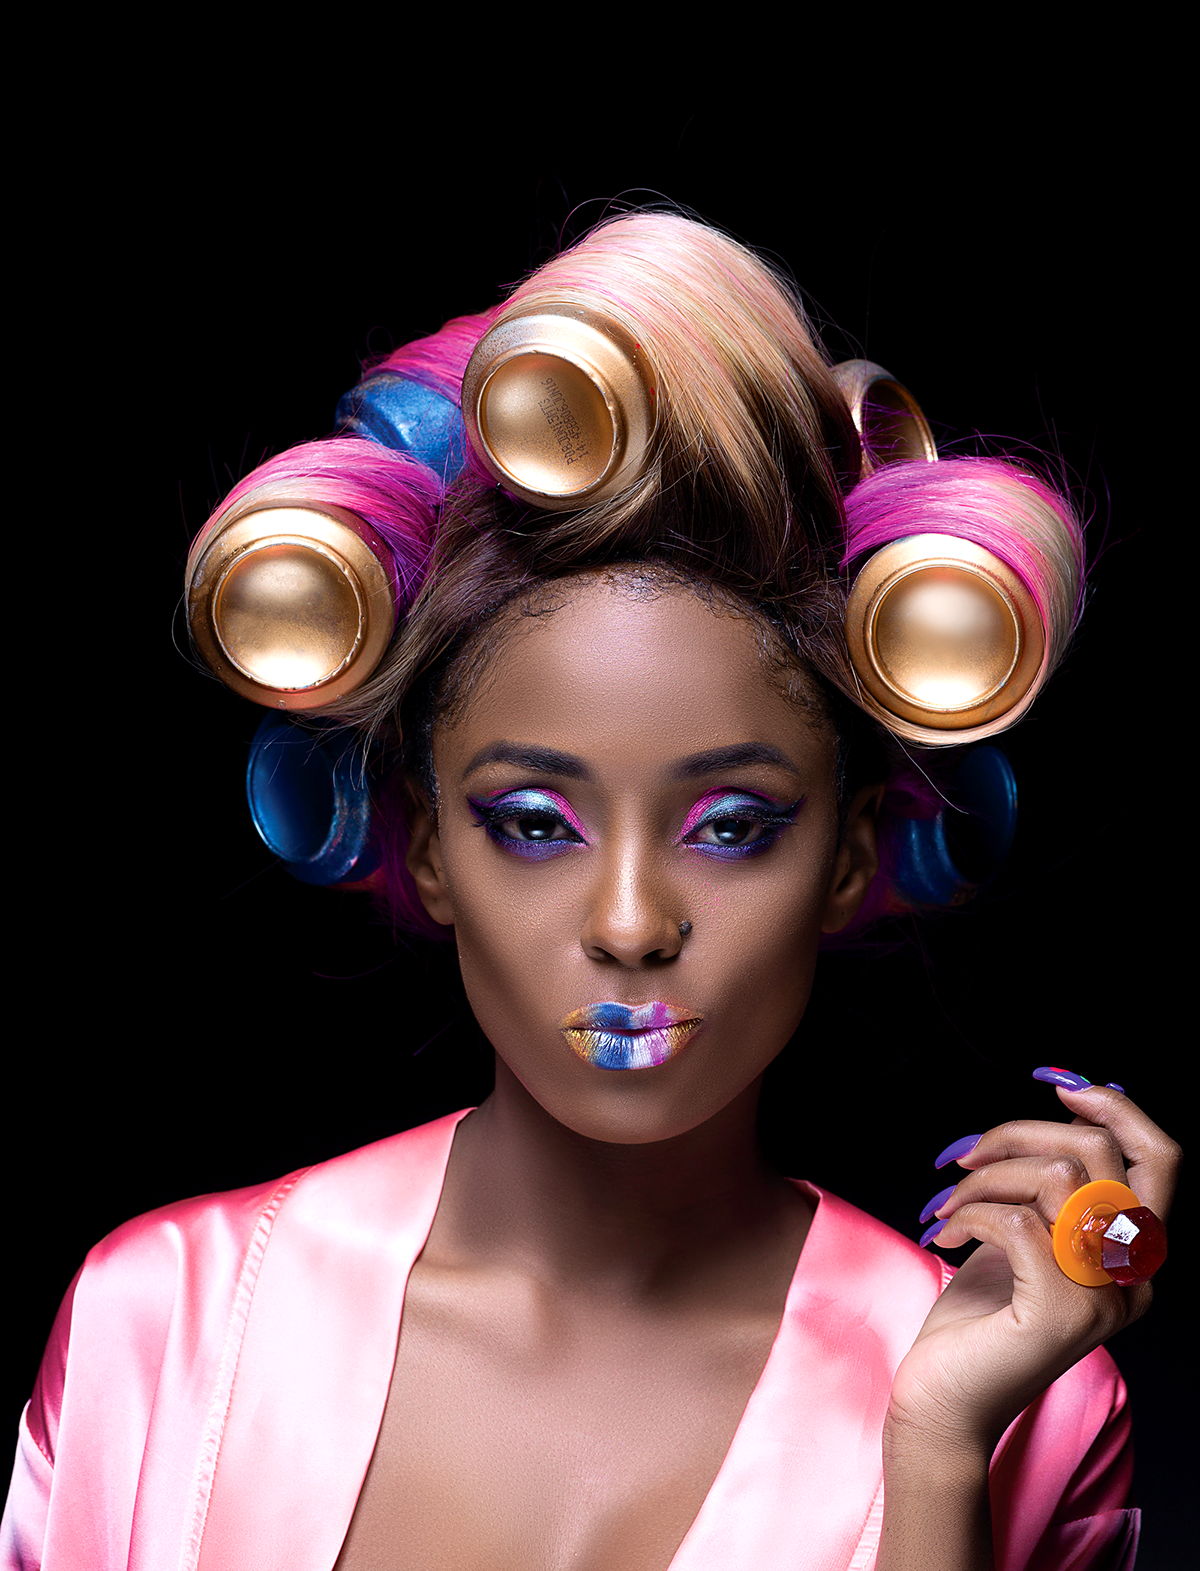 colors Darkskin africa musician musiccovers pink beauty portrait studio